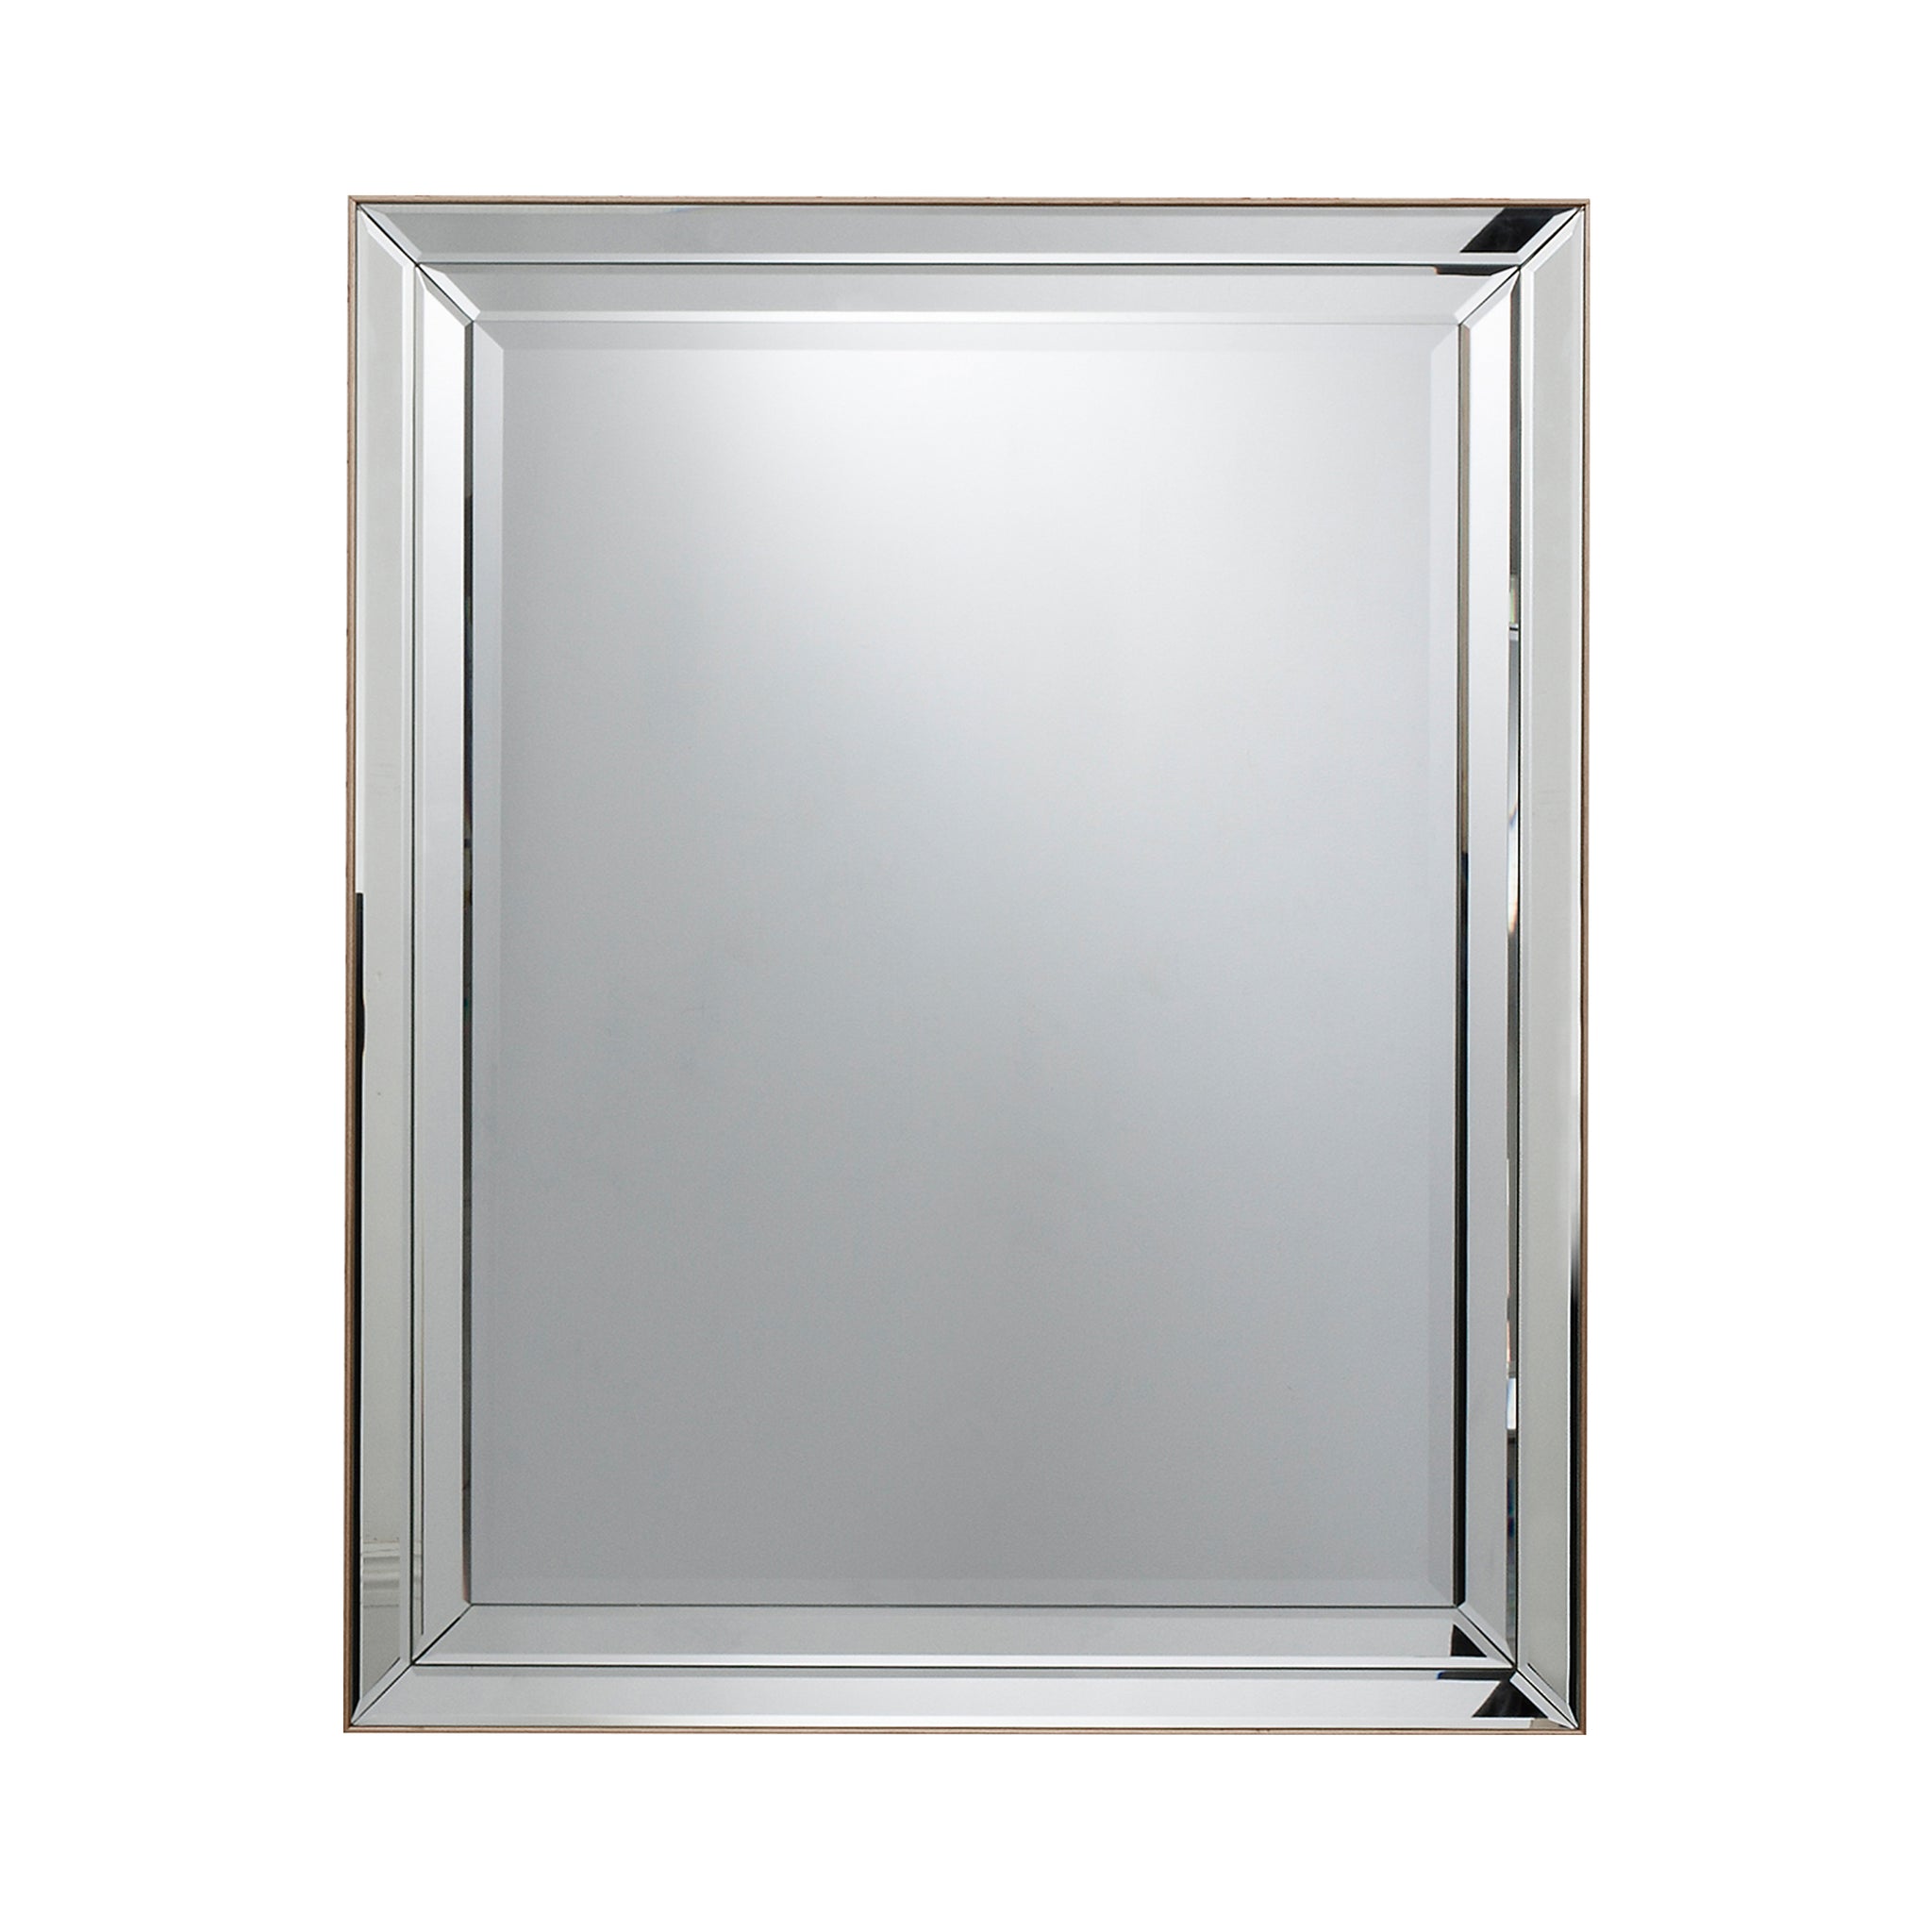 Rosh Mirror 59 x 80 cm